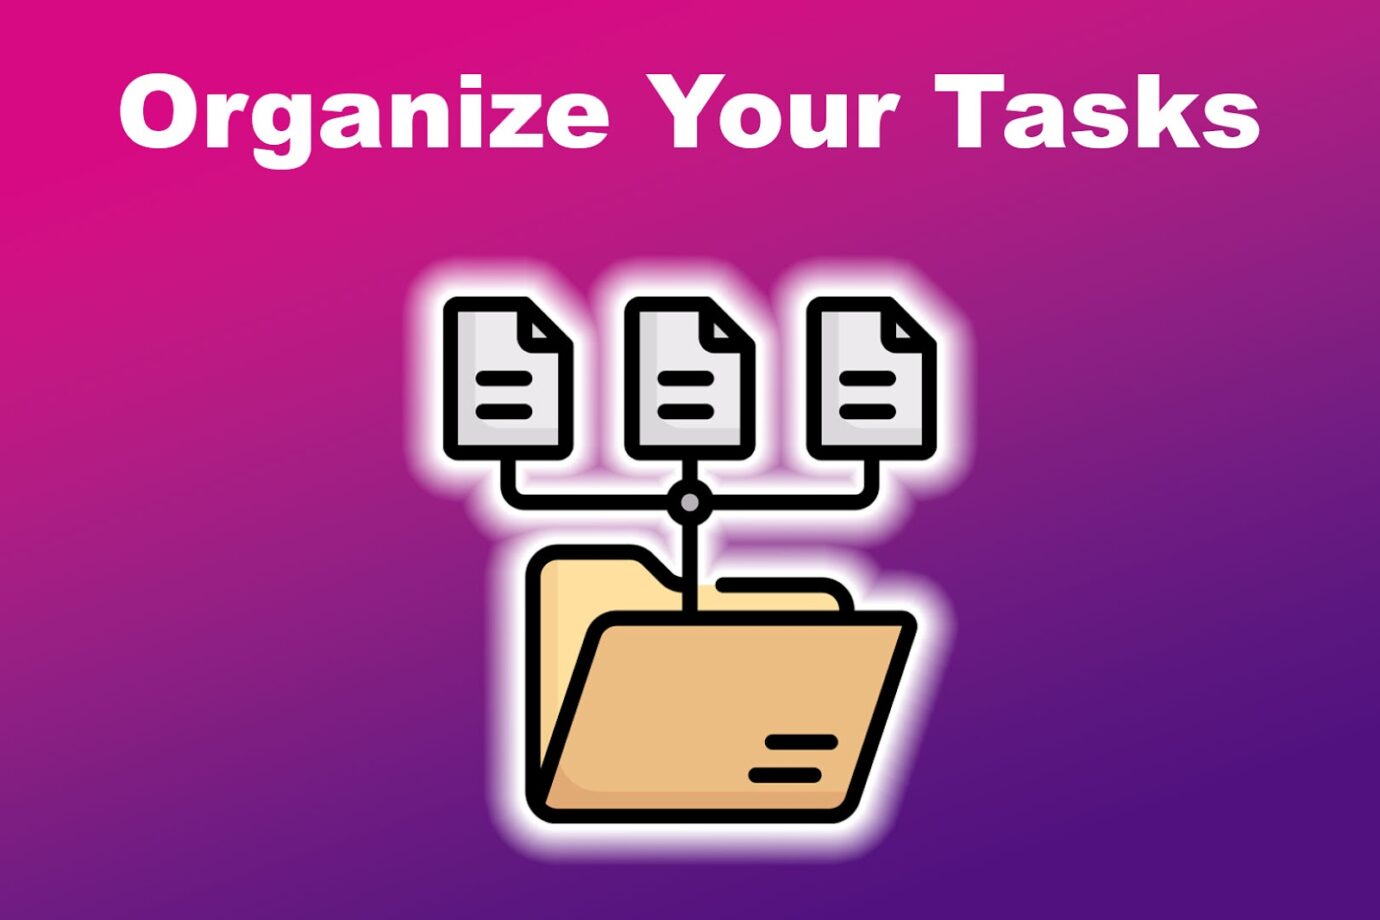 Organizing Tasks to Increase Productivity